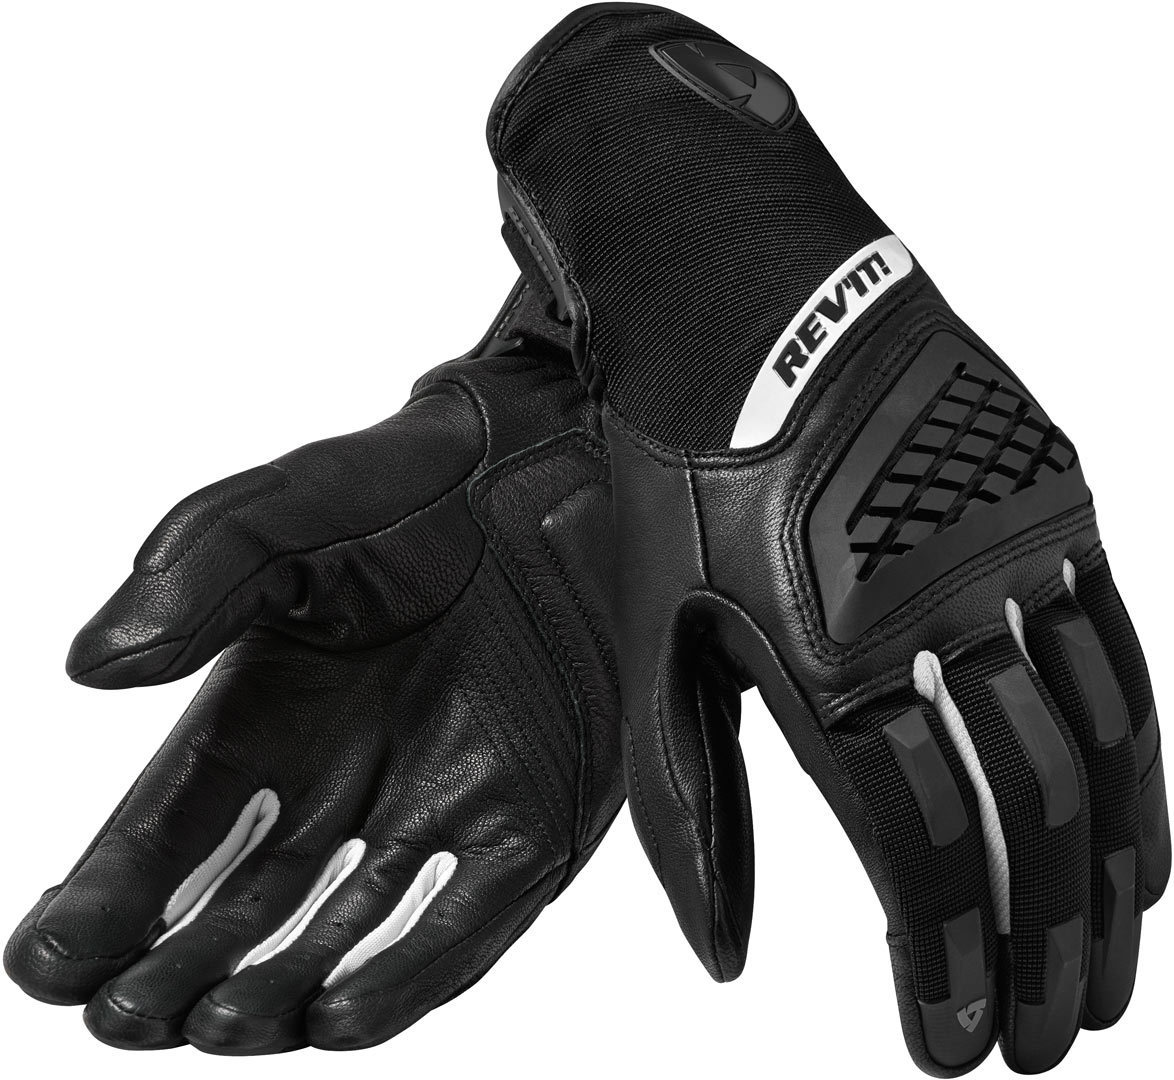 Revit Neutron 3 Damen Motocross Handschuhe, schwarz-weiss, Größe M, schwarz-weiss, Größe M